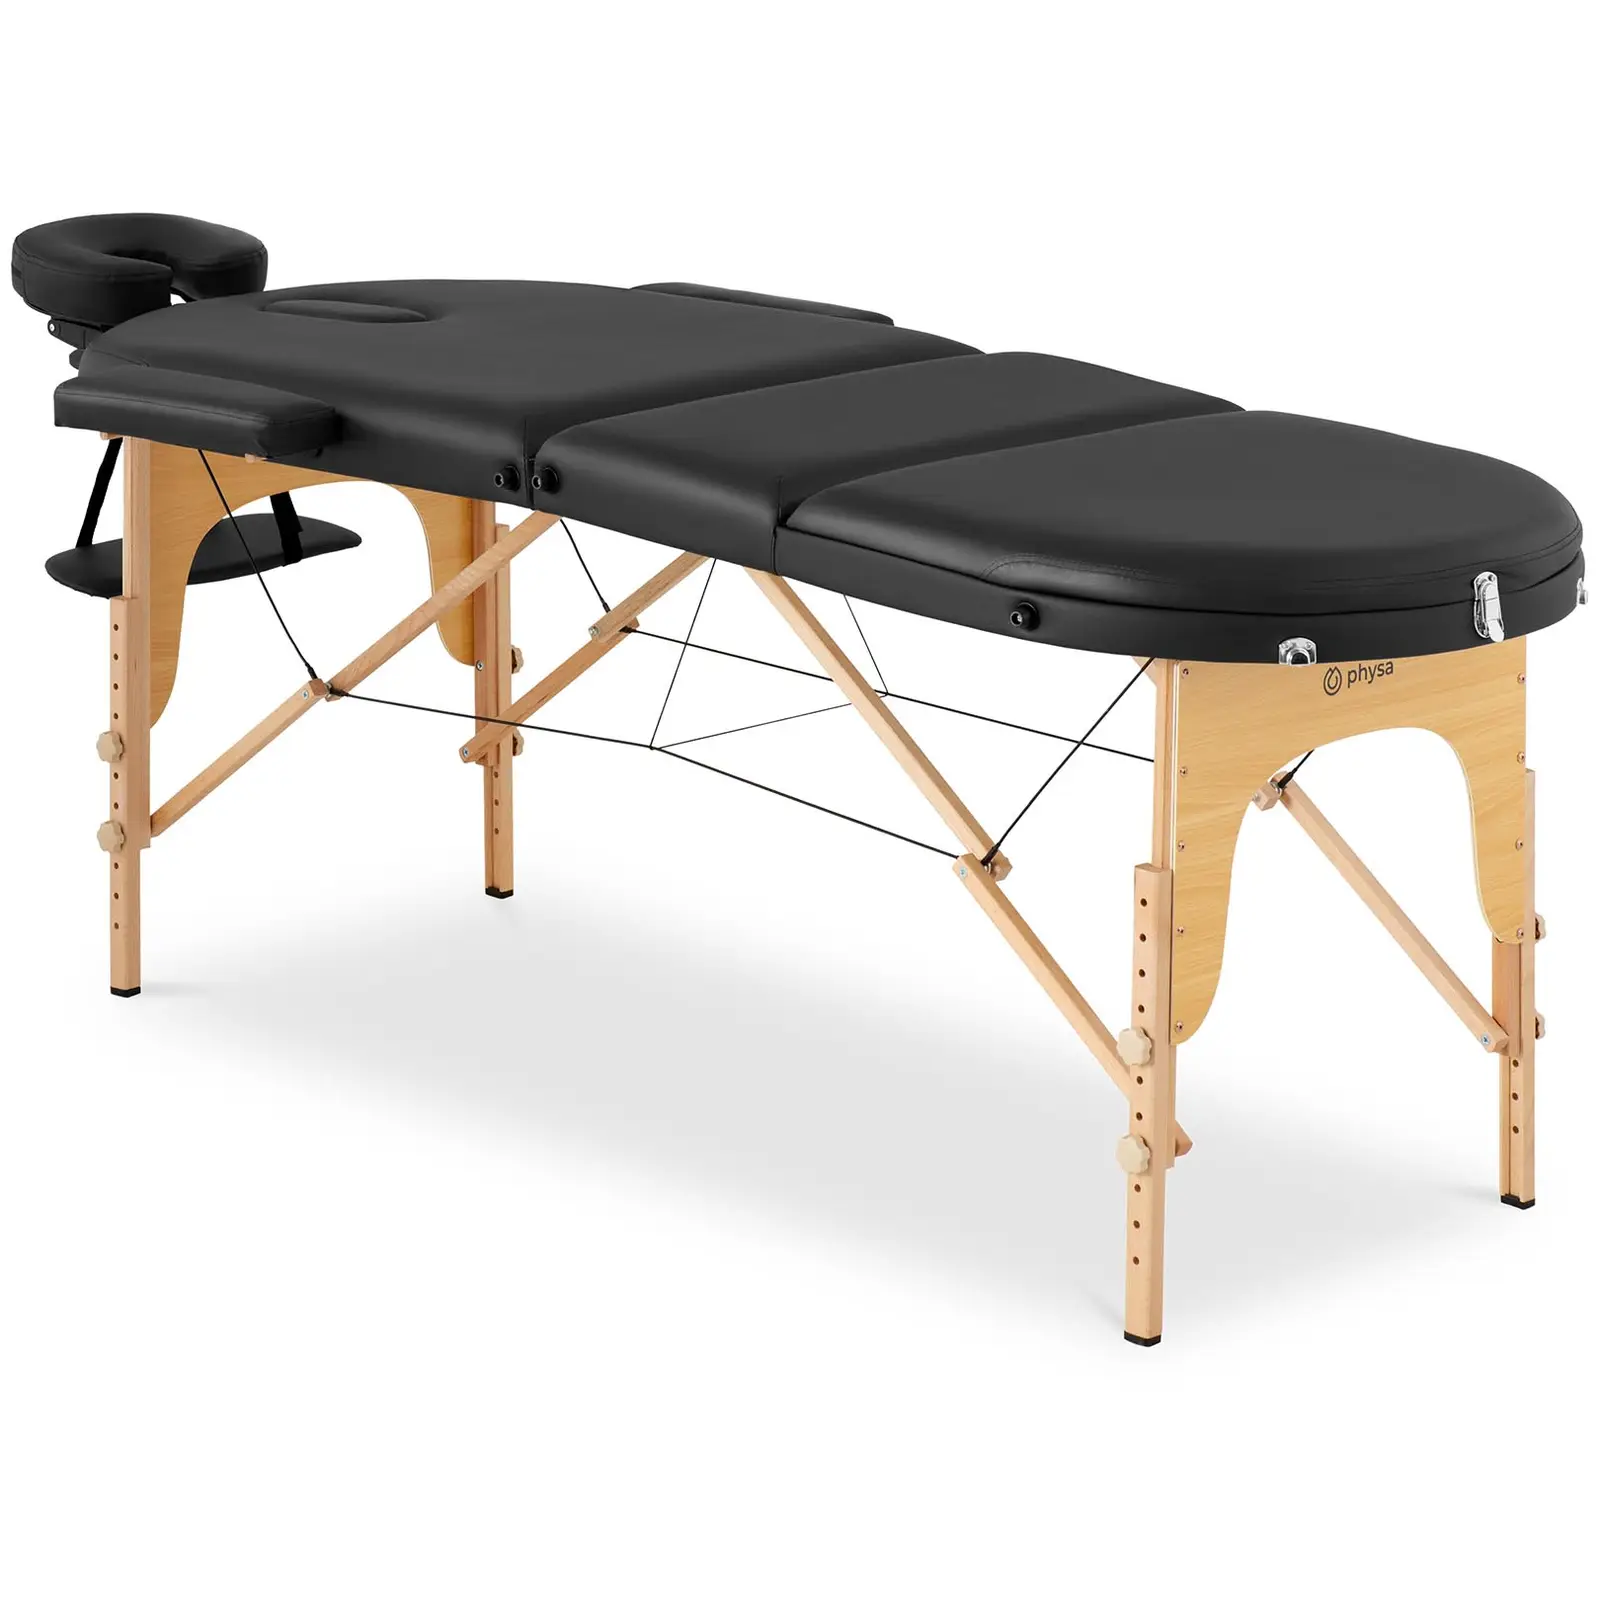 Hopfällbar massagebänk - 185-211 x 70-88 x 63-85 cm - 227 kg - Svart